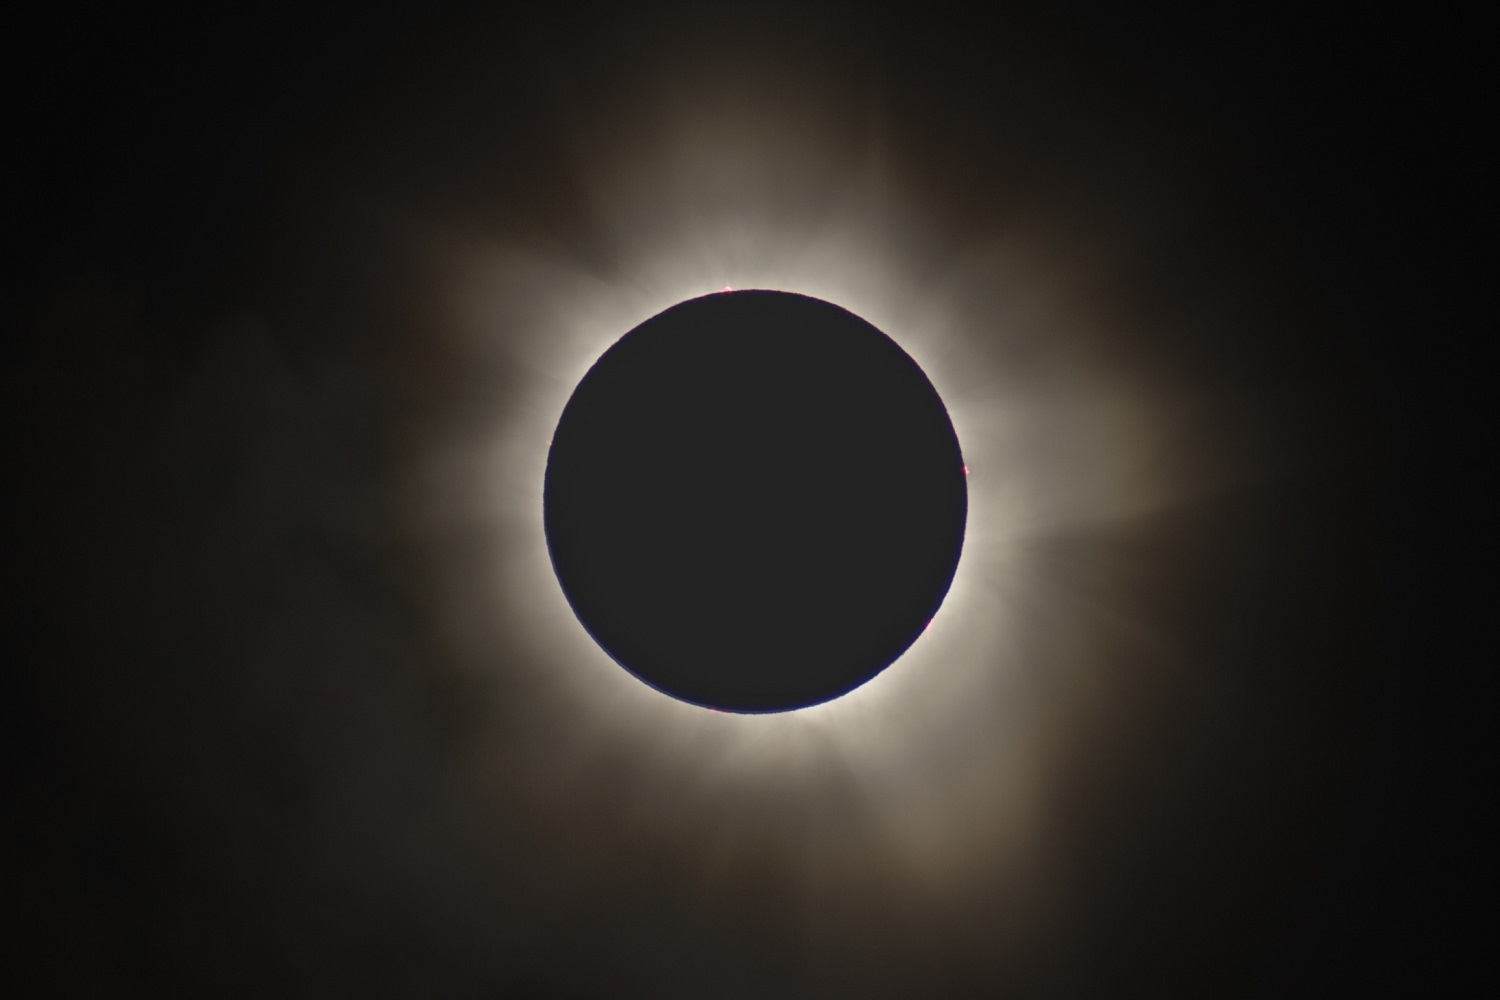 Cairns Total Solar Eclipse of 14 Nov 2012